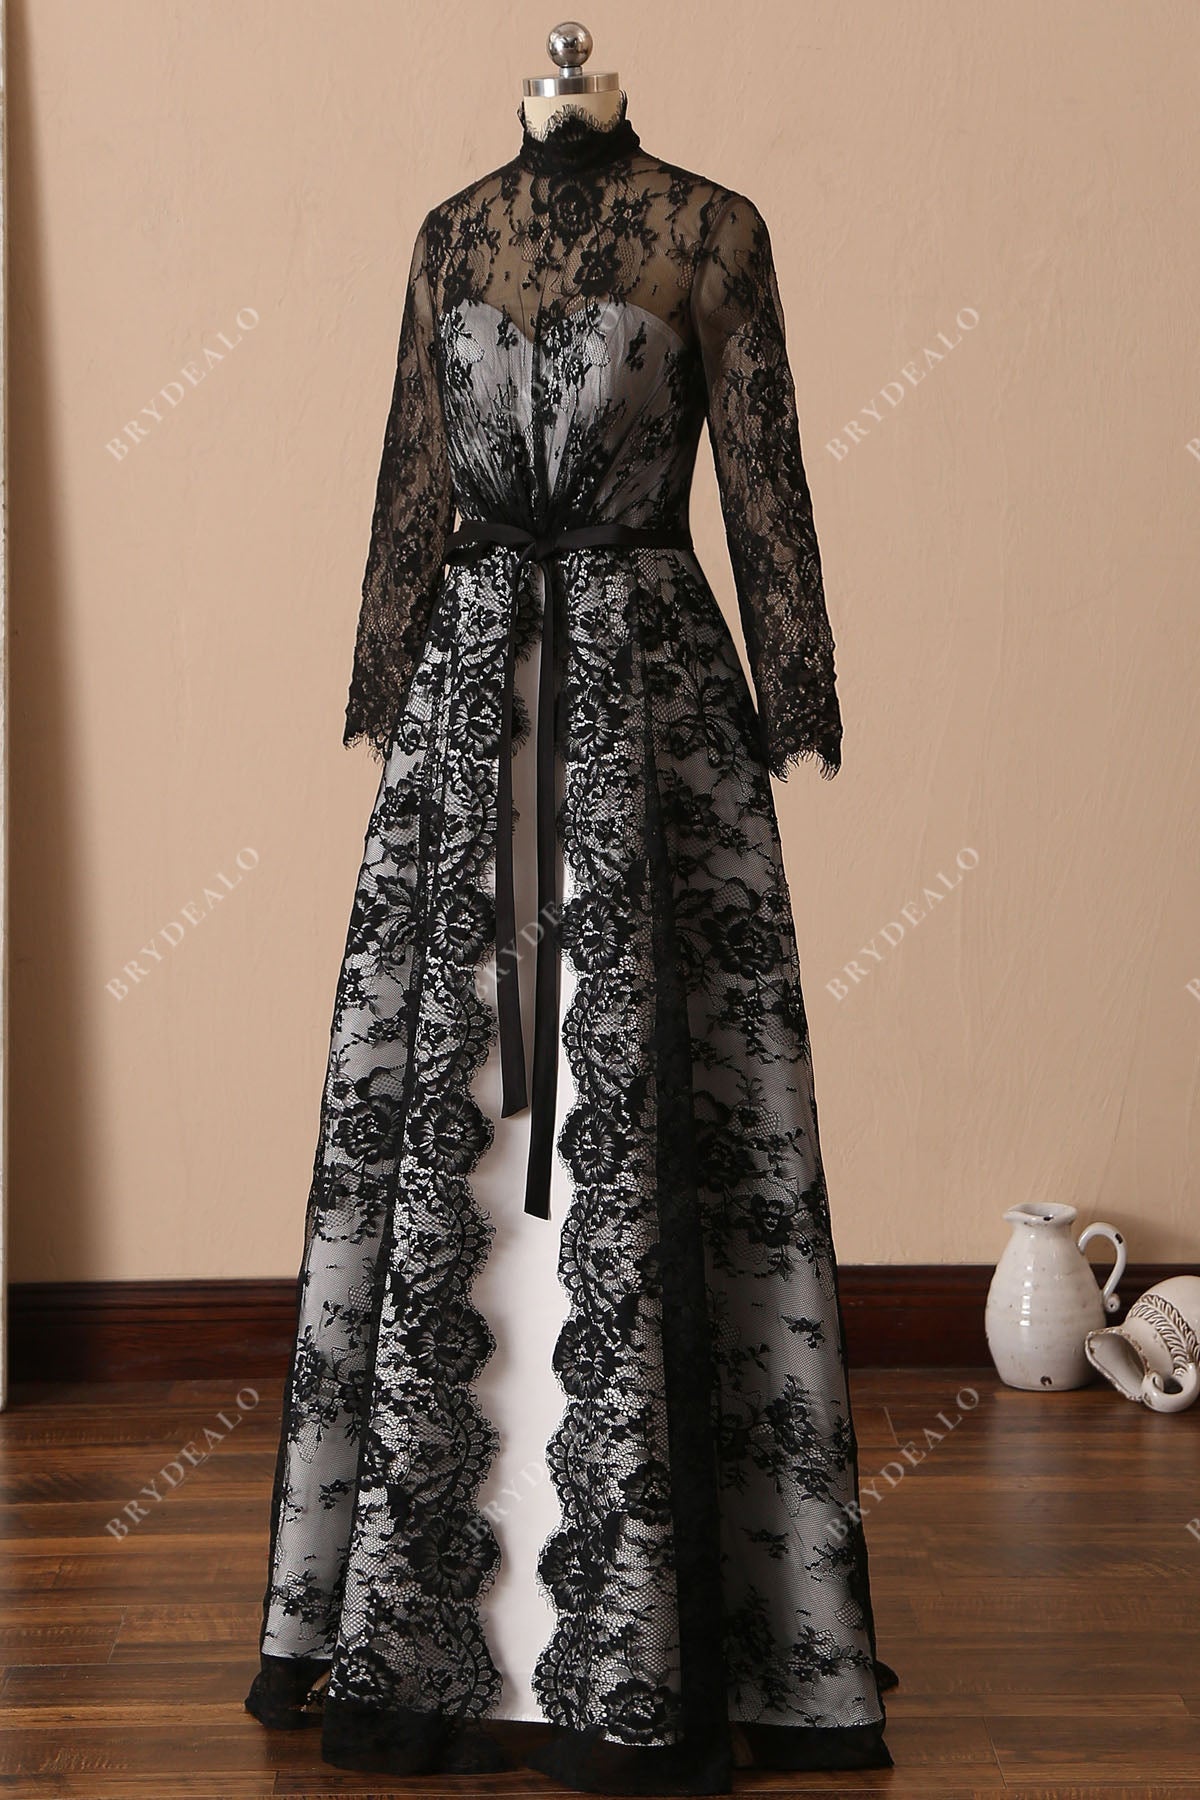 sheer long sleeves black lace overlaid white modern wedding dress